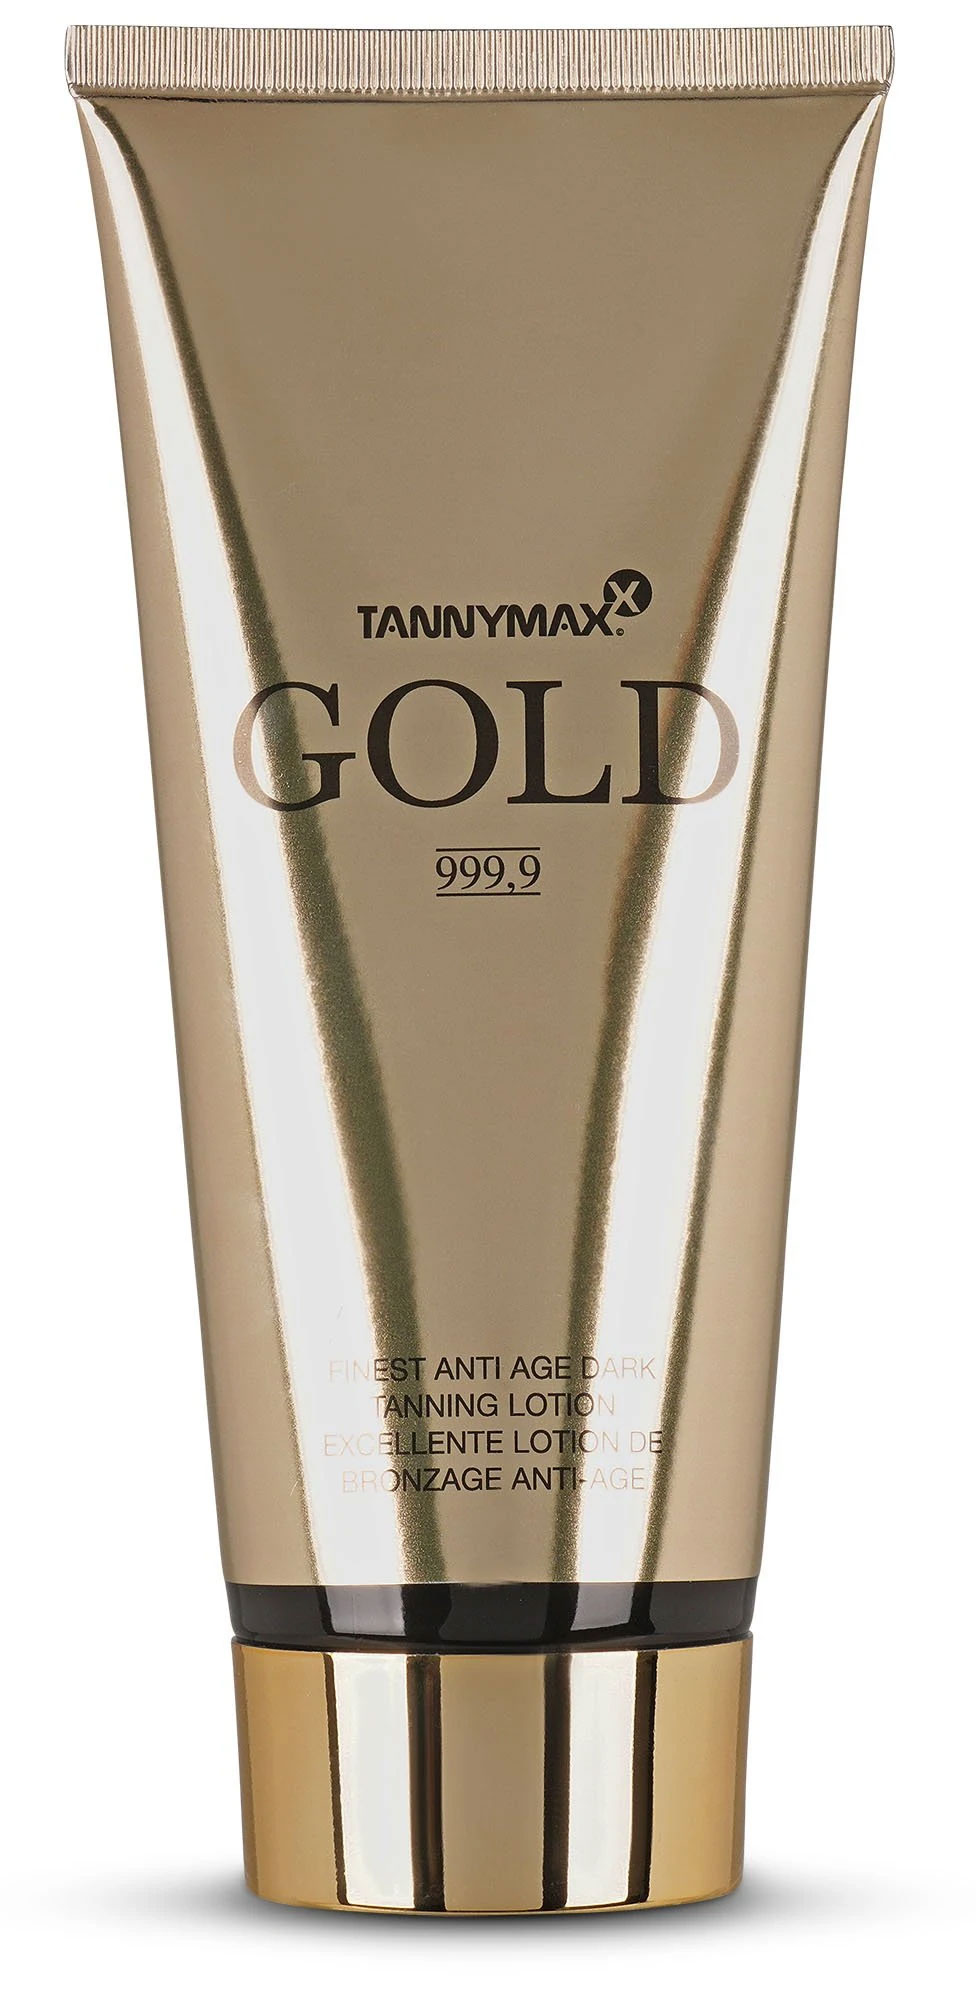 Tannymaxx Gold 999.9 Finest Anti Age Dark Tanning Lotion 200mL Bräunungsvertärker 0521010000